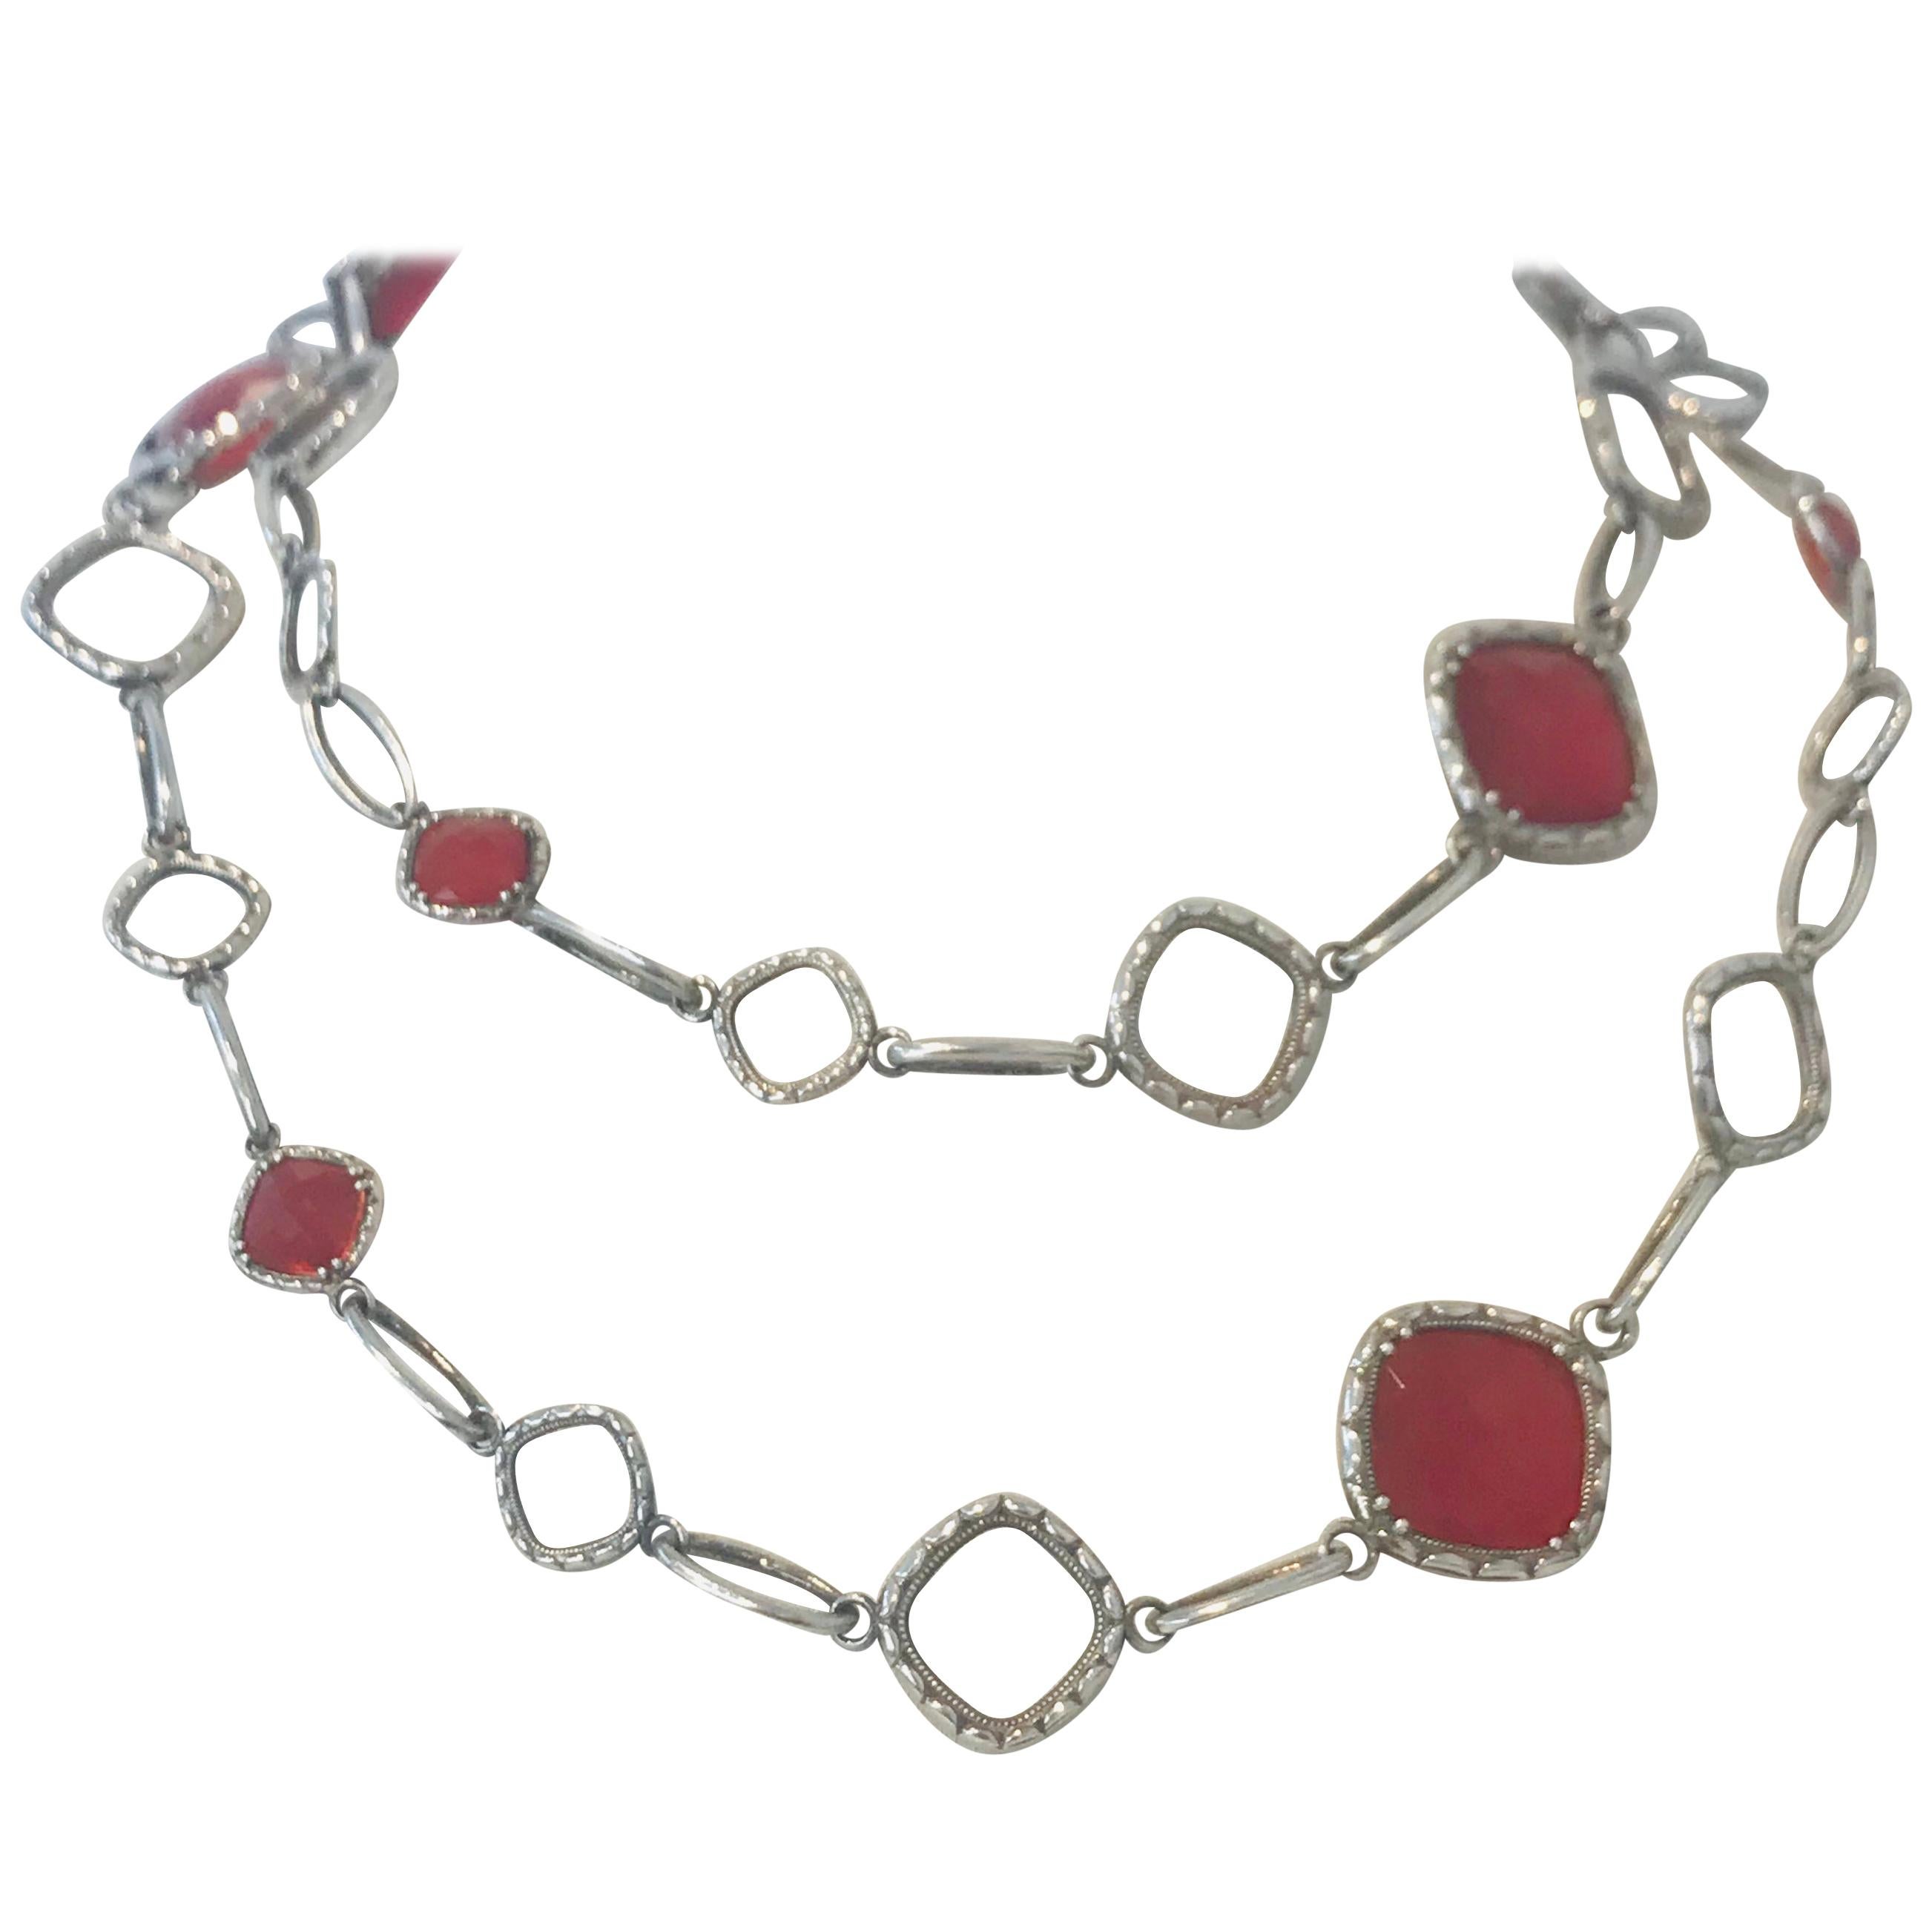 Seltene Tacori-Halskette mit kaskadenförmigem Edelstein aus klarem Quarz über rotem Onyx, rar